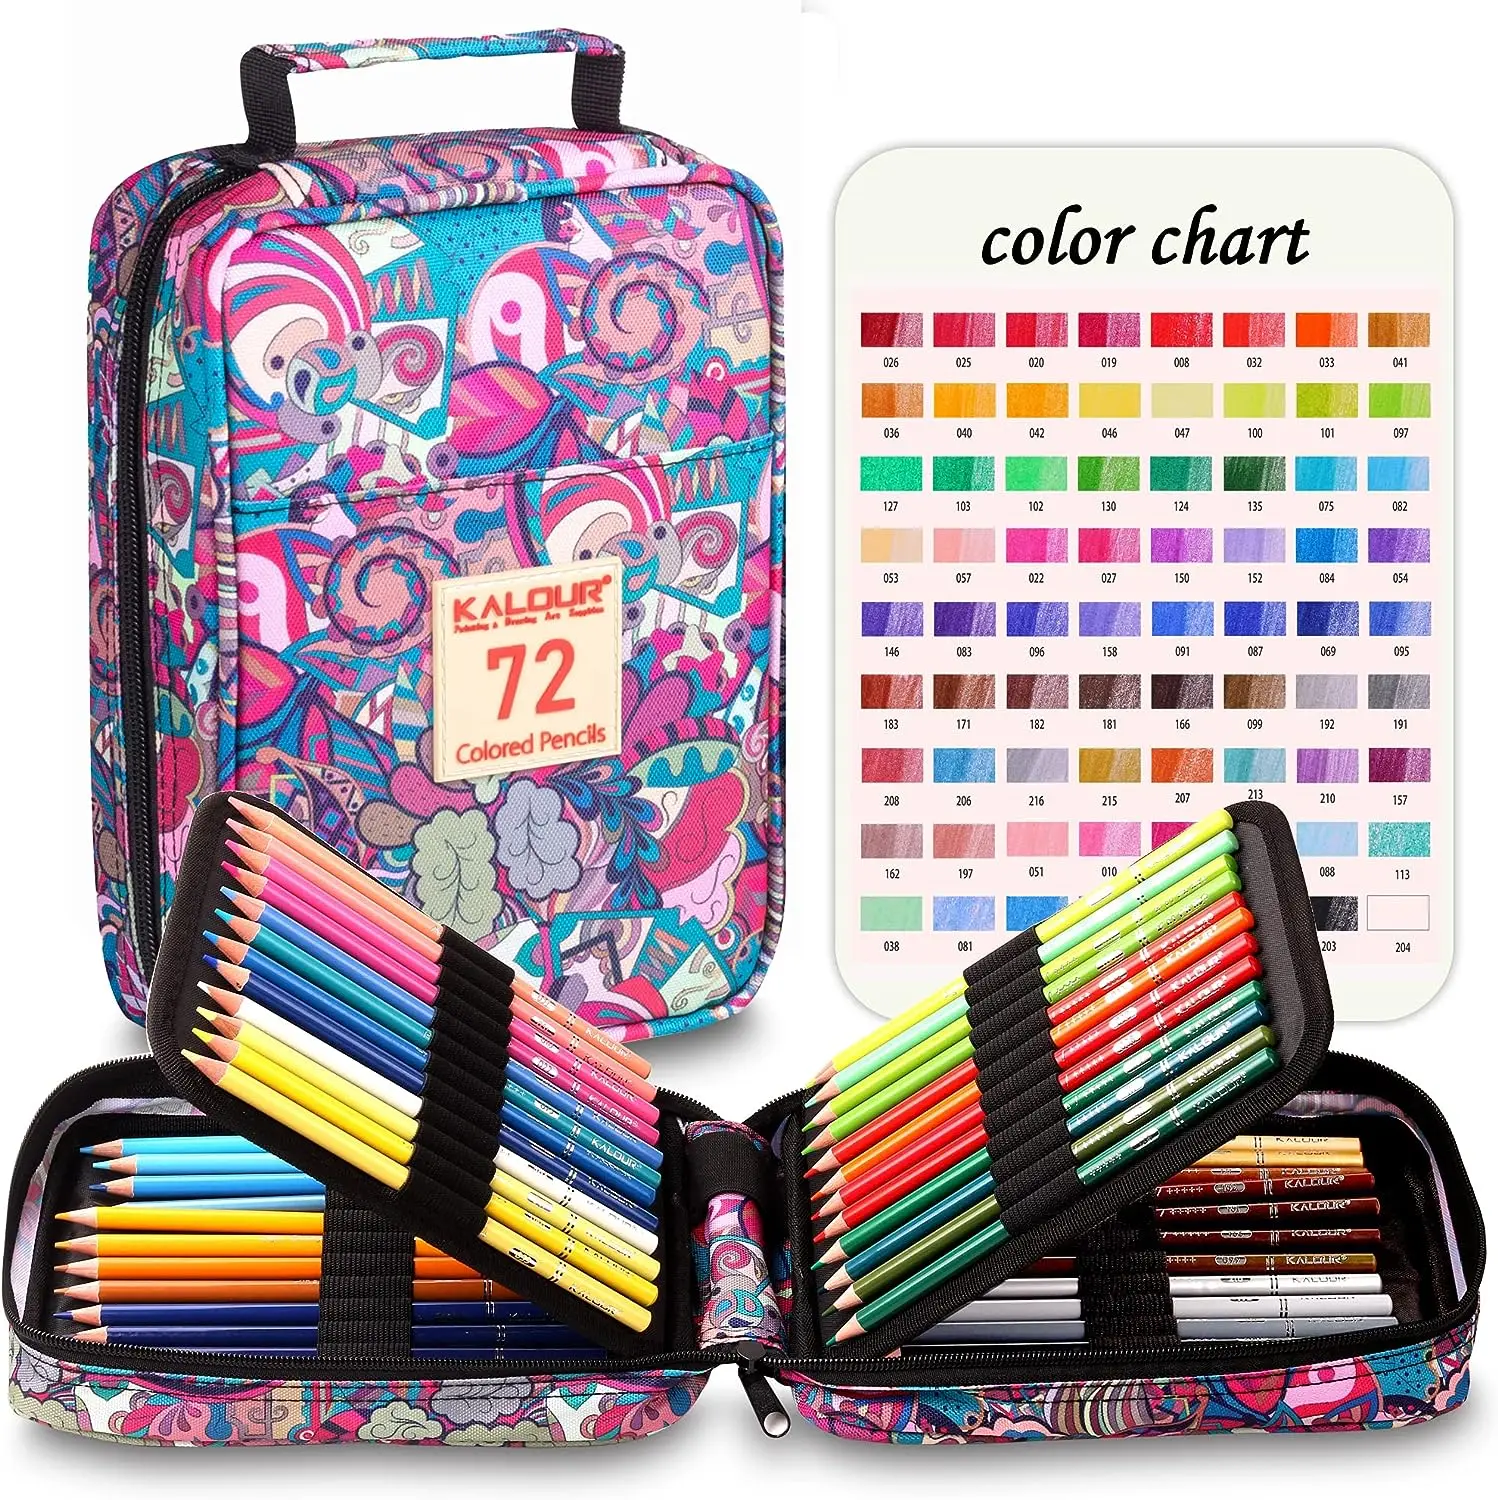 KALOUR Premium Colored Pencils Set of 72 Colors,Zipper Pencil Slot Case,with Sharpener,Soft Core,Ideal for Layering Blending